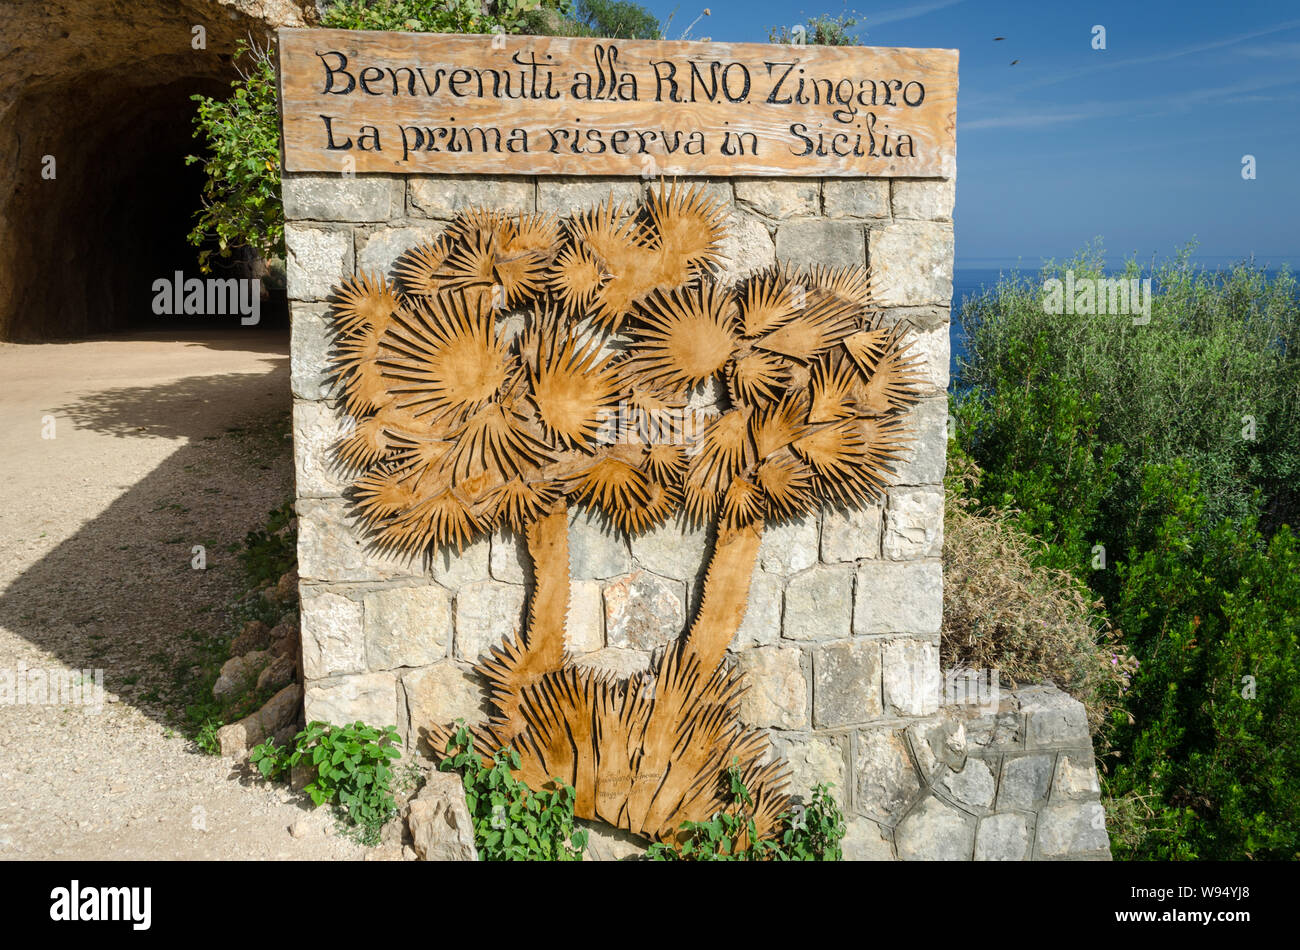 Am südlichen Eingang zum Naturpark Zingaro (Riserva dello Zingaro), in Sizilien, Italien Willkommen Anmelden Stockfoto